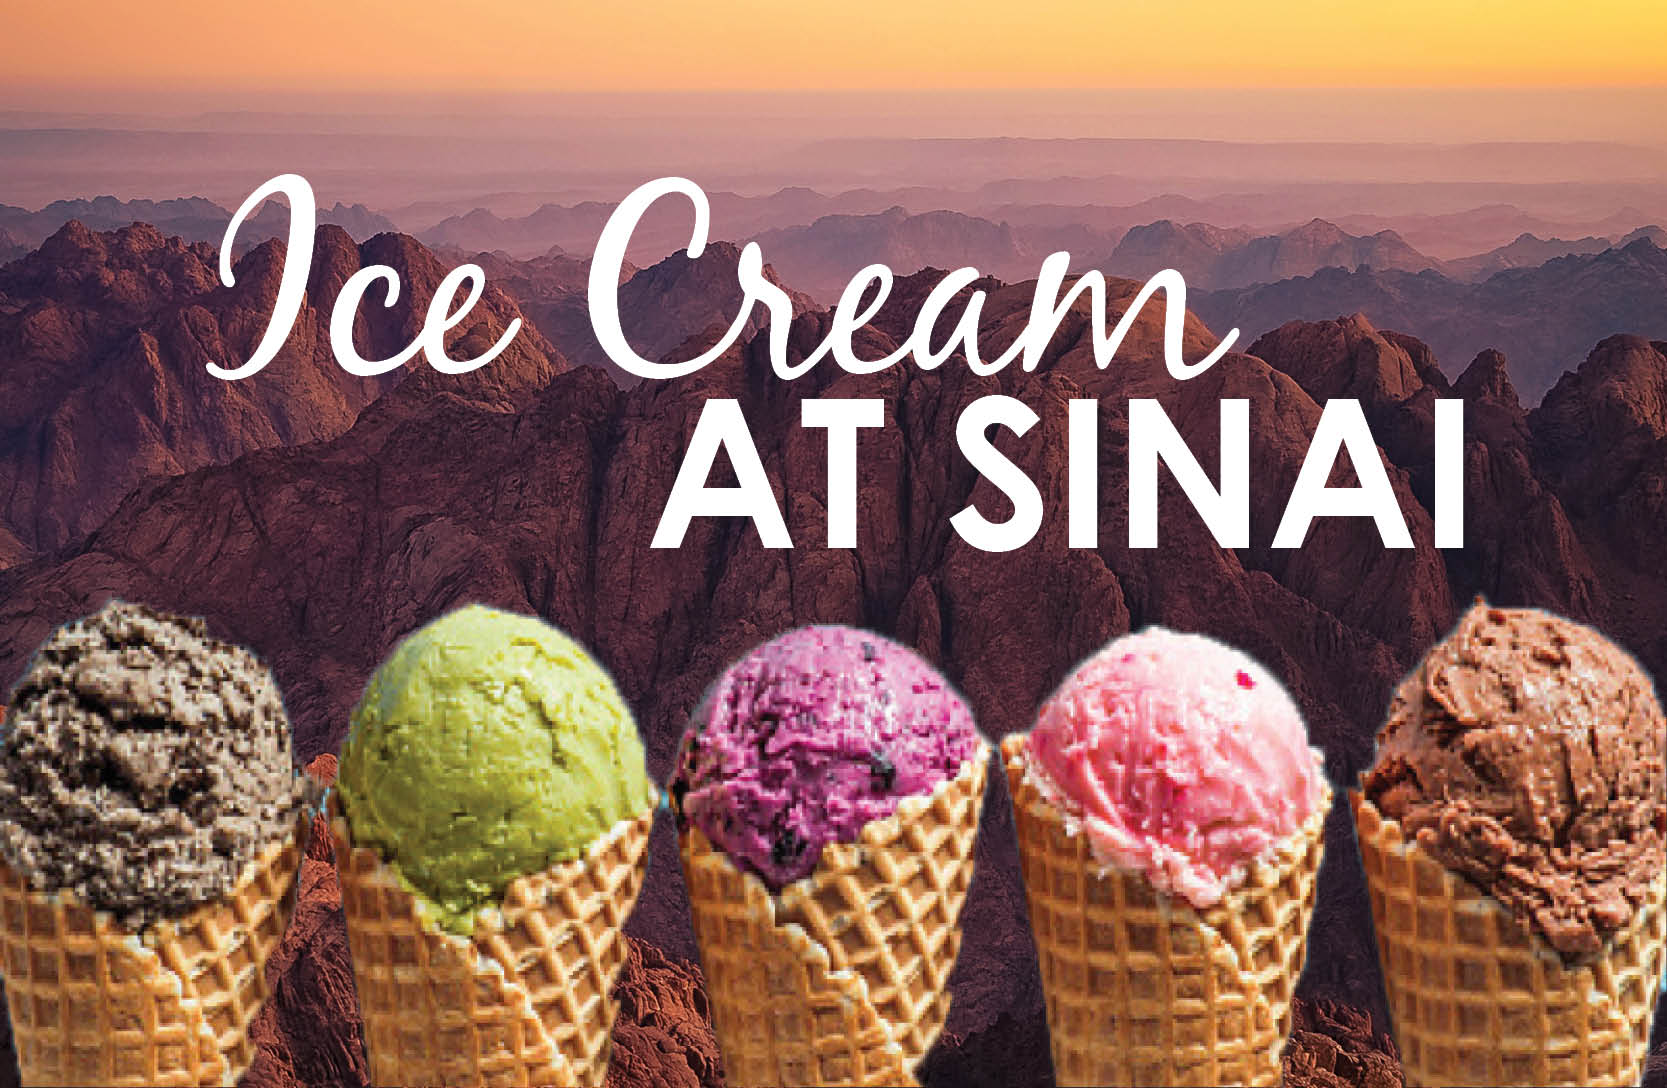 Ice Cream at Sinai